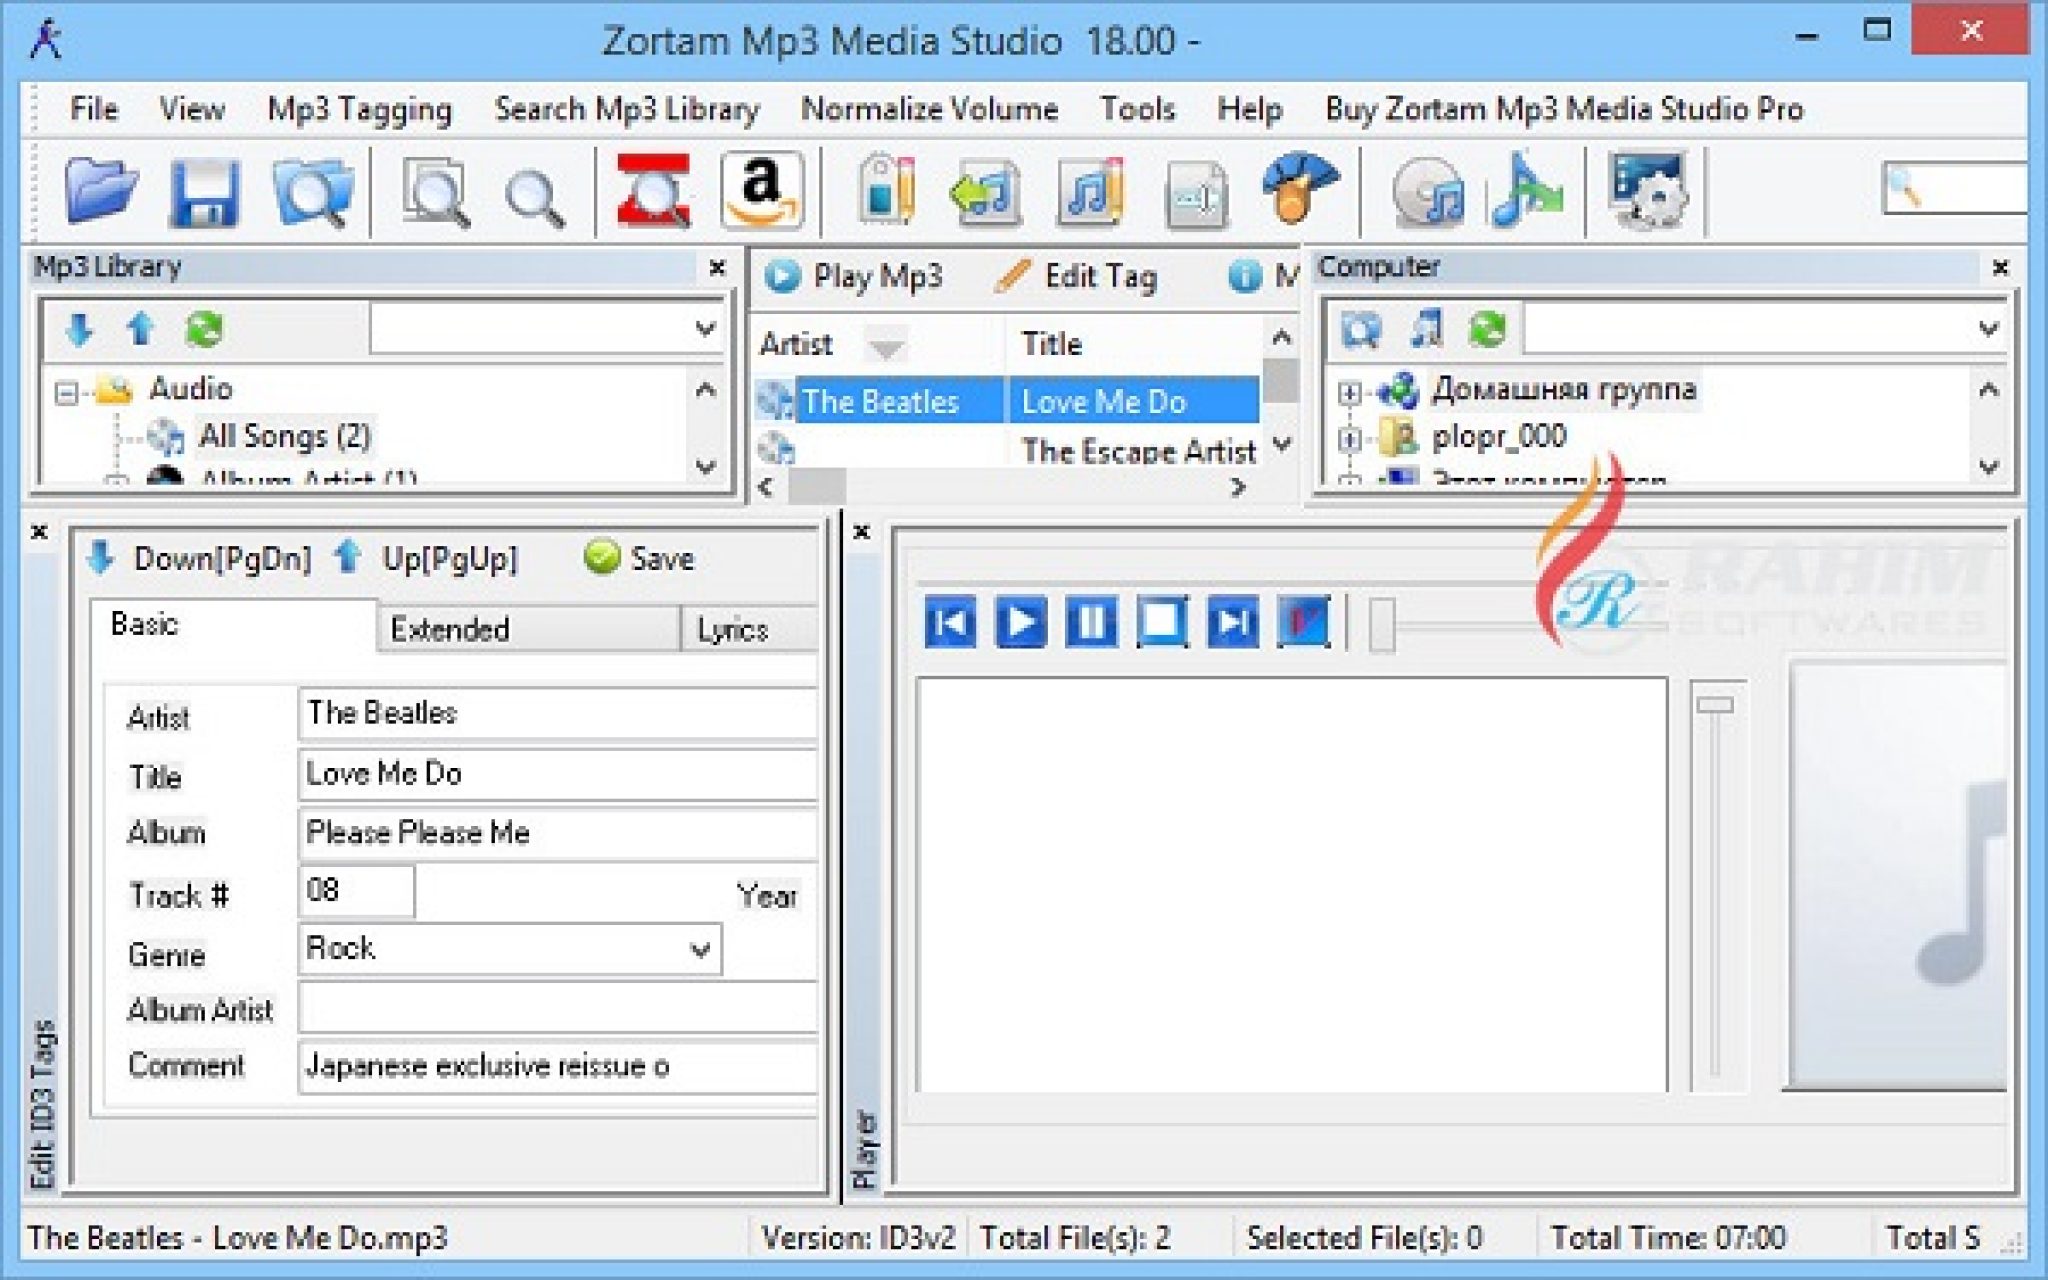 Zortam Mp3 Media Studio Pro 30.90 instal the new version for apple